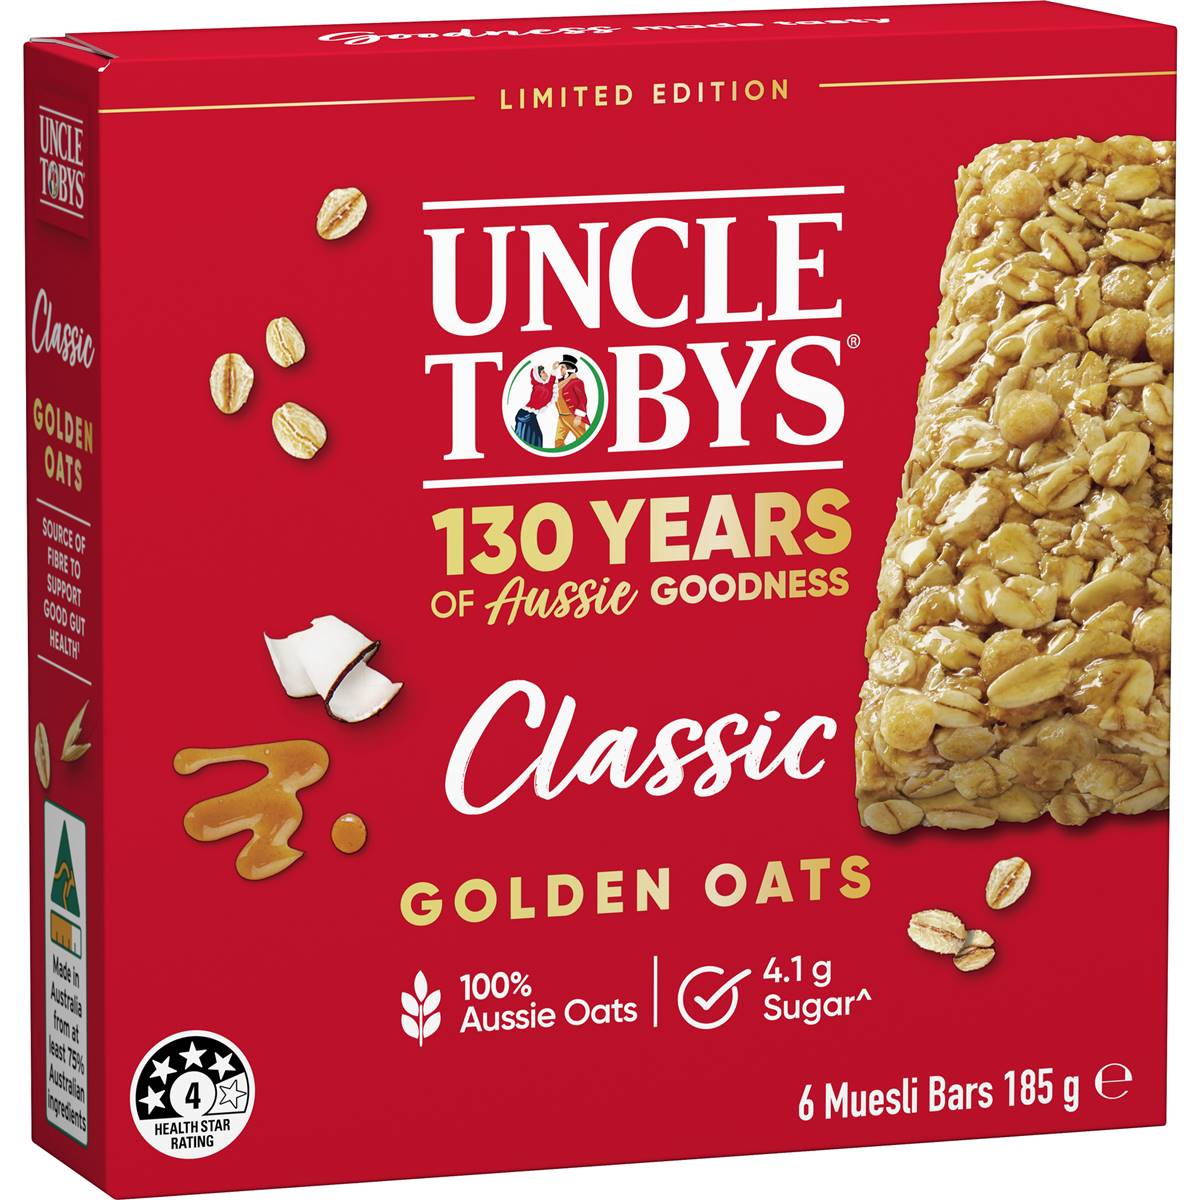 Calories in Uncle Tobys Classic Muesli Bar Golden Oats